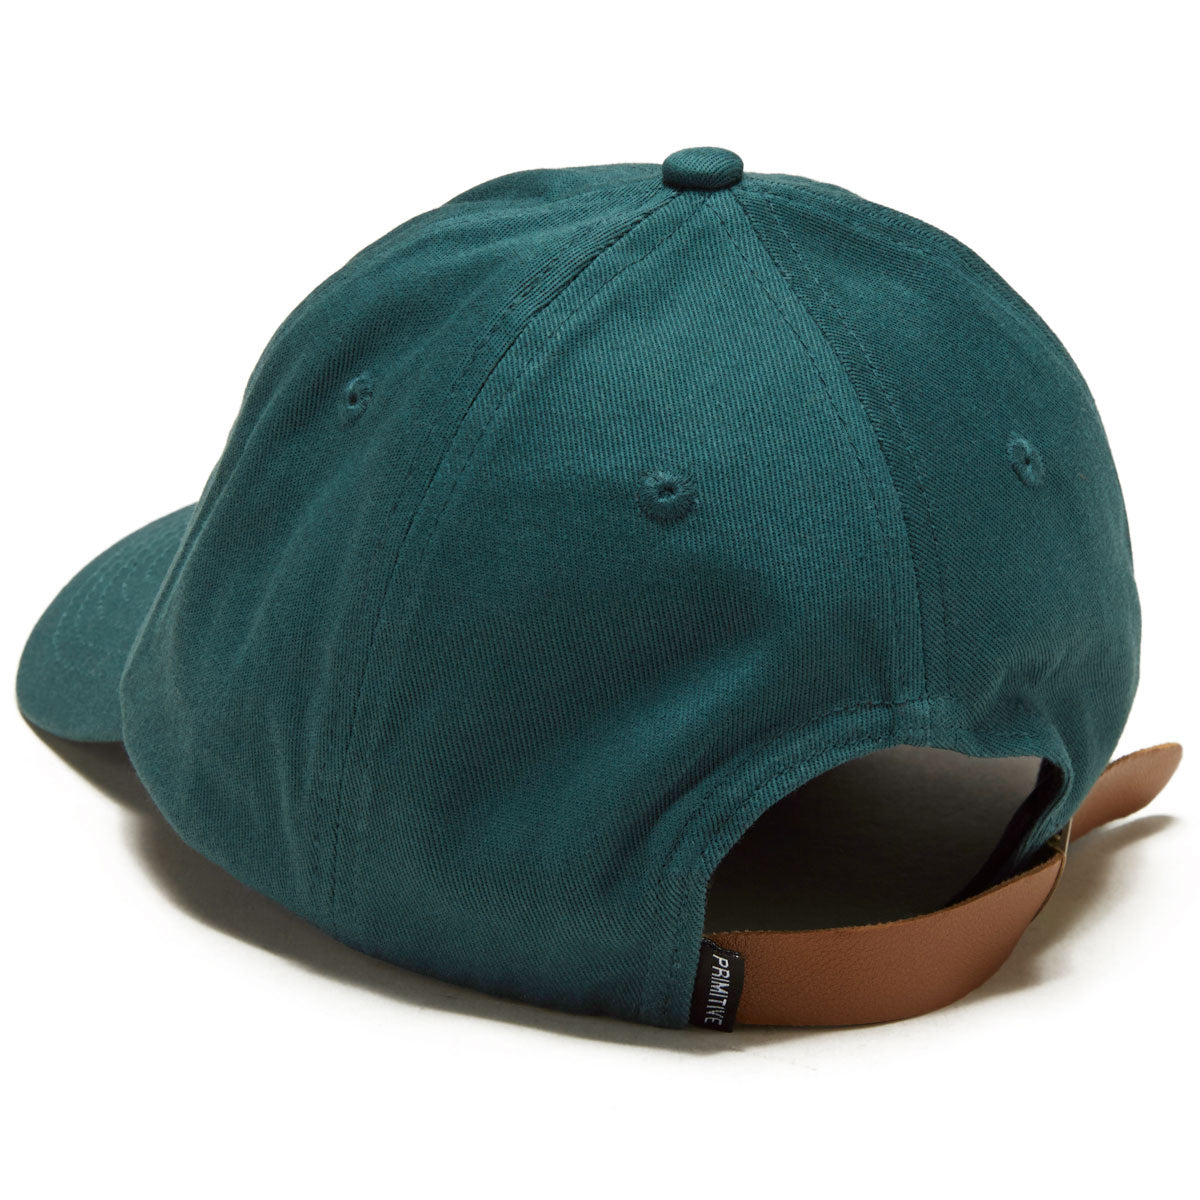 Primitive Dirty P Strapback Hat - Forest Green image 2